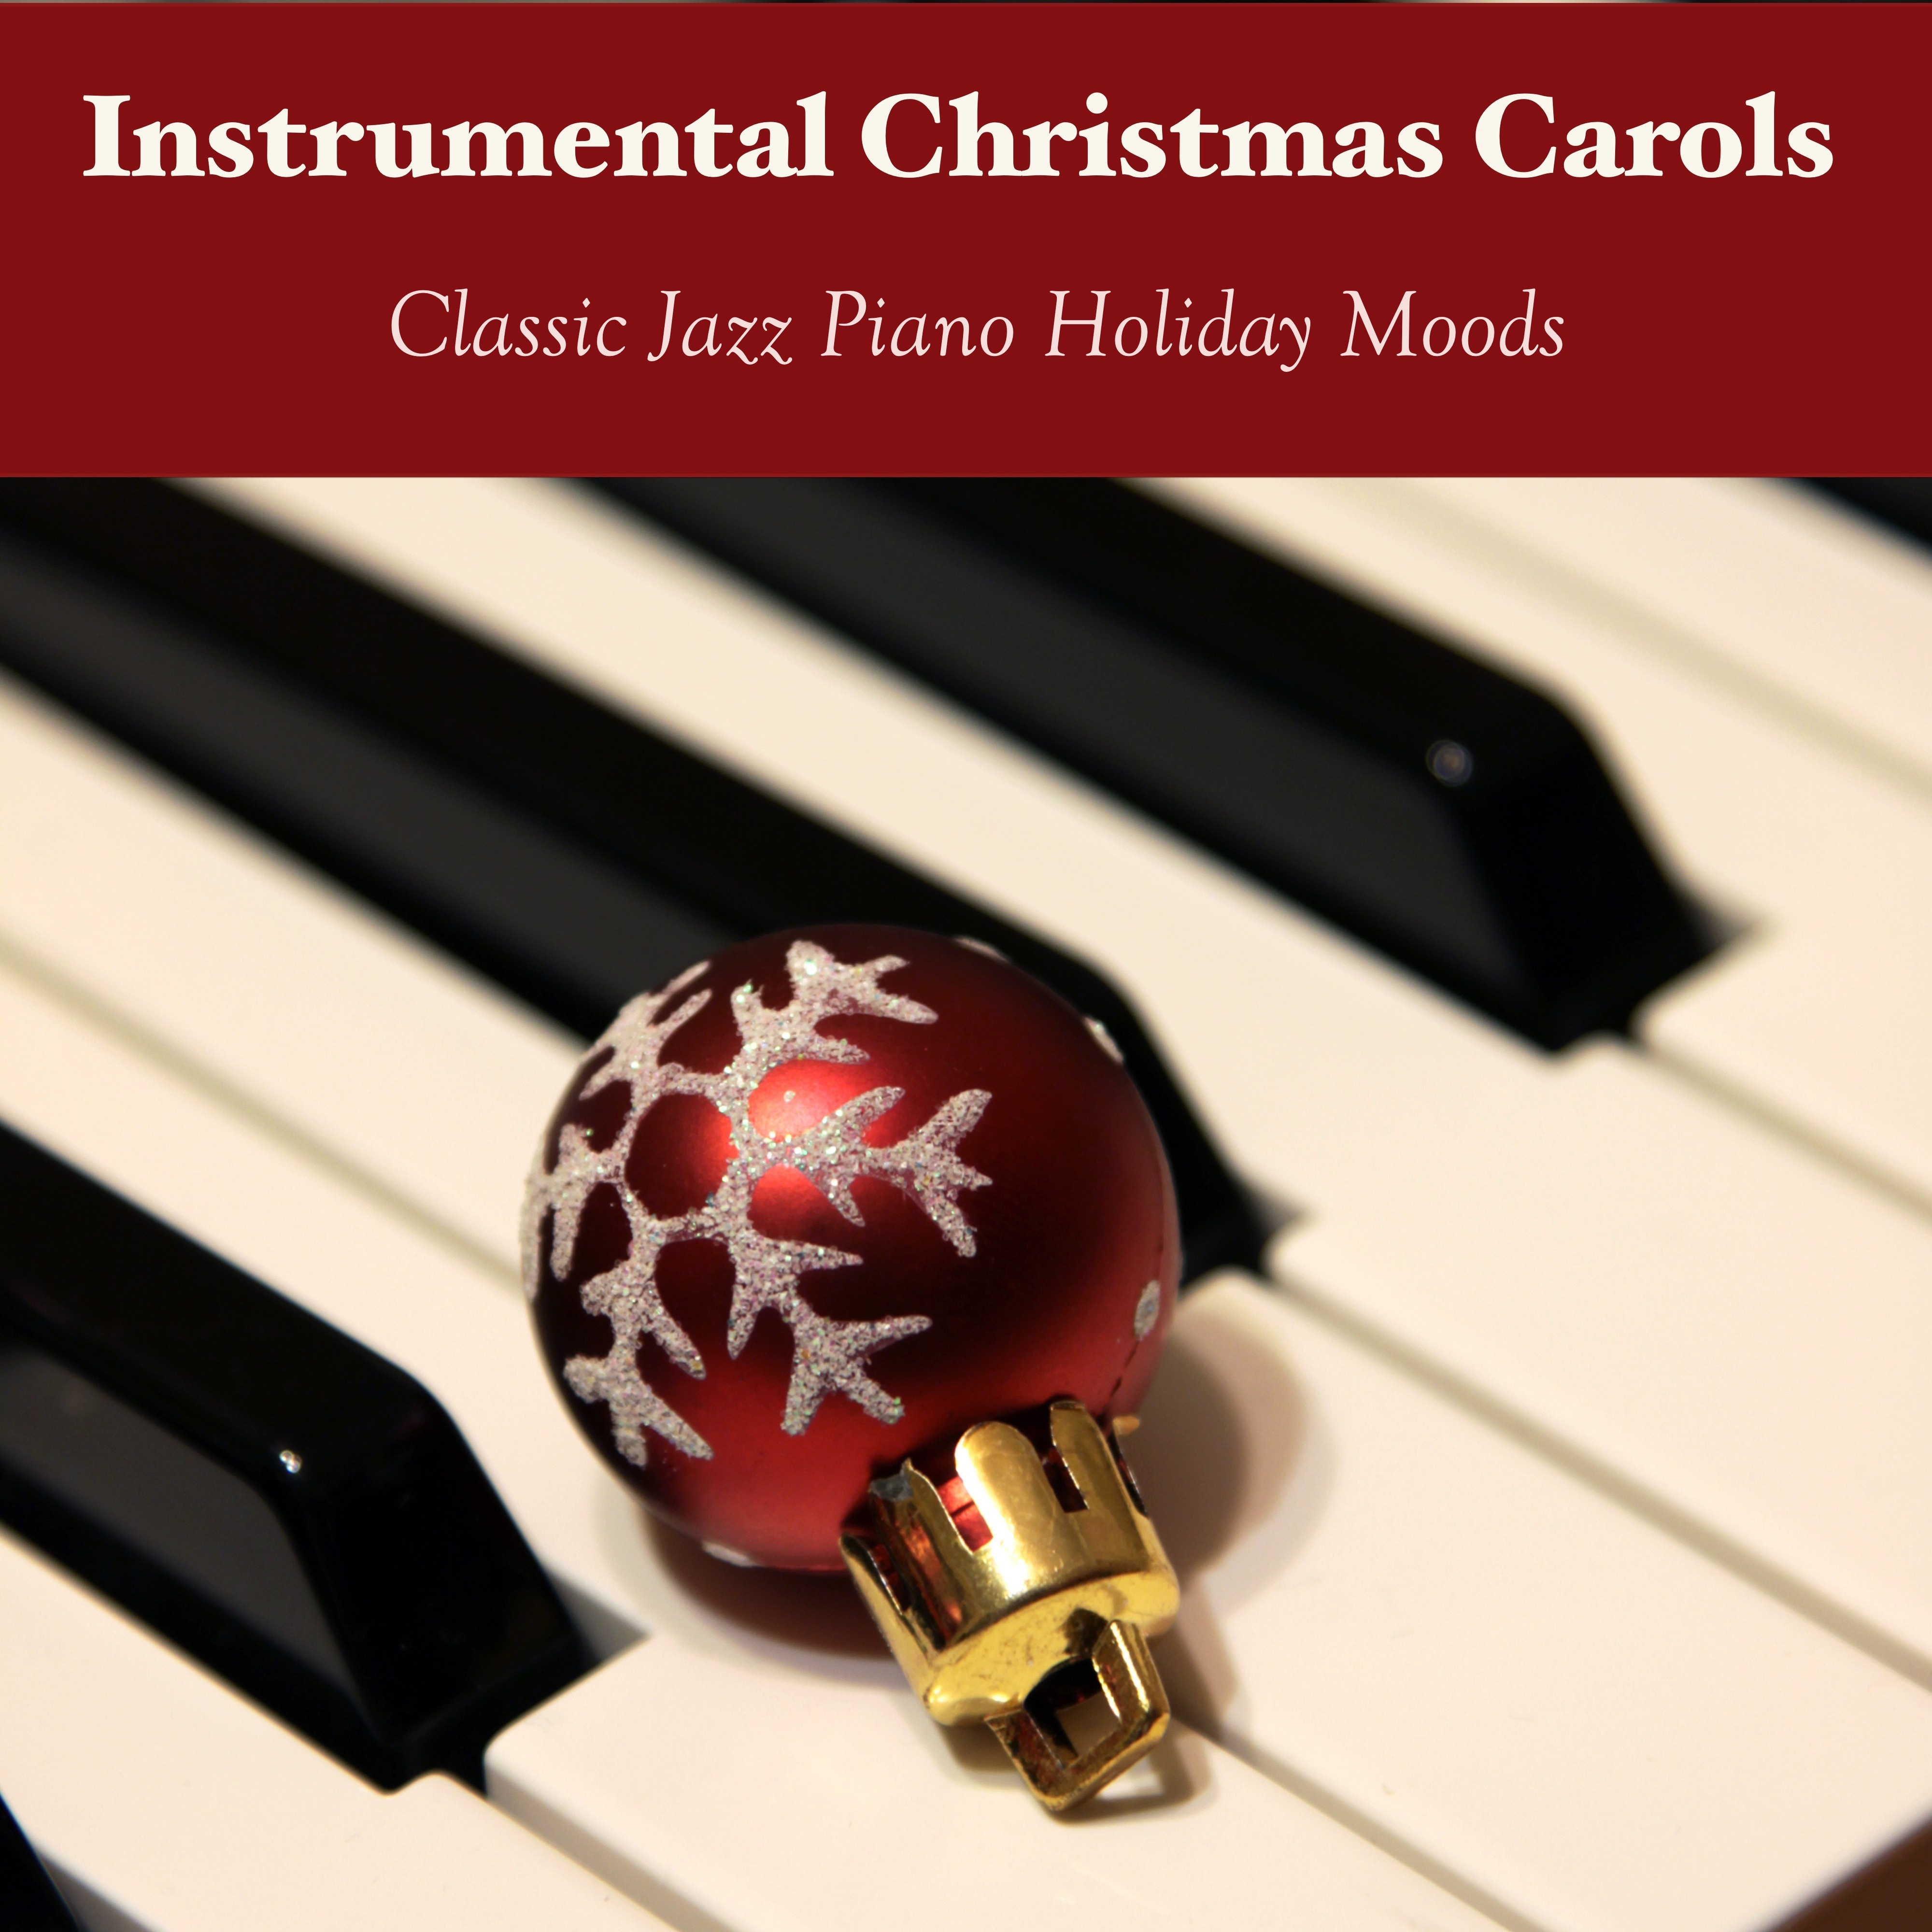 Instrumental Christmas Carols - Classic Jazz Piano Holiday Moods